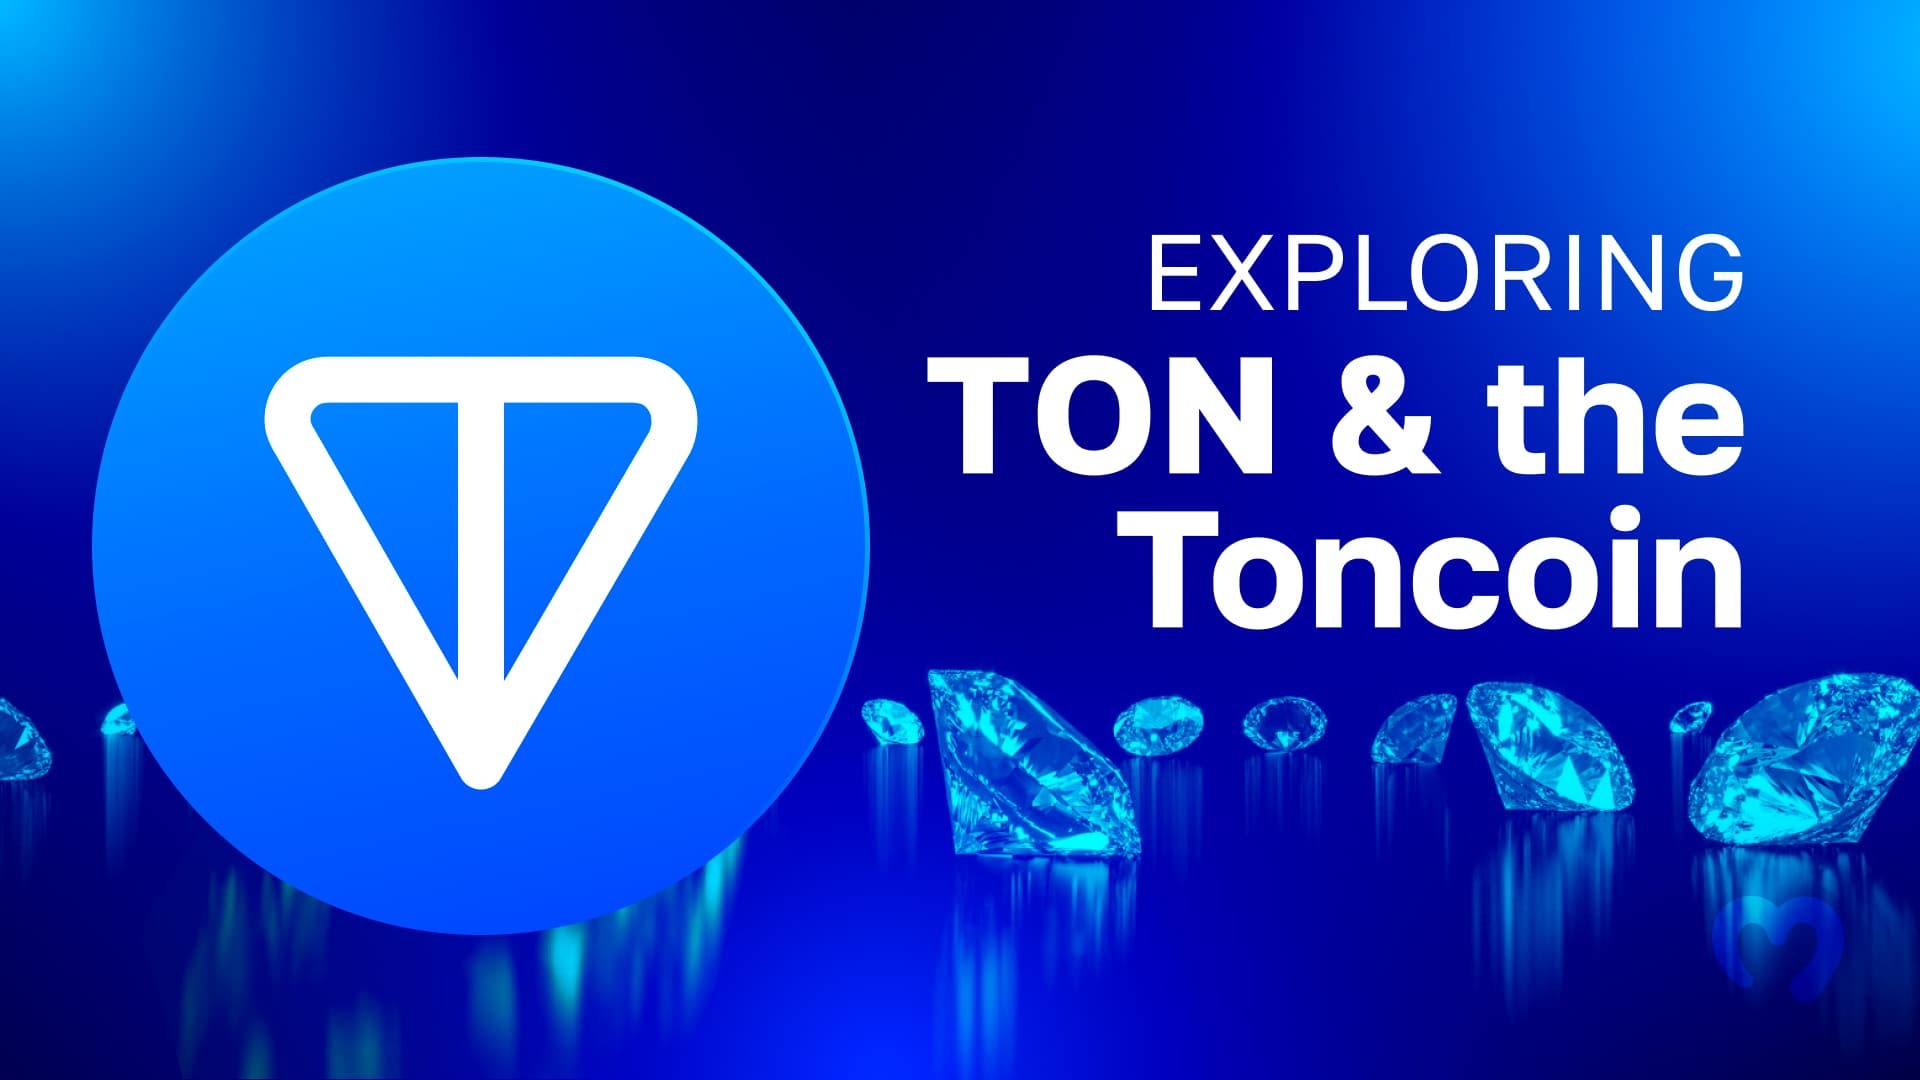 Toncoin price today, TON to USD live price, marketcap and chart | CoinMarketCap